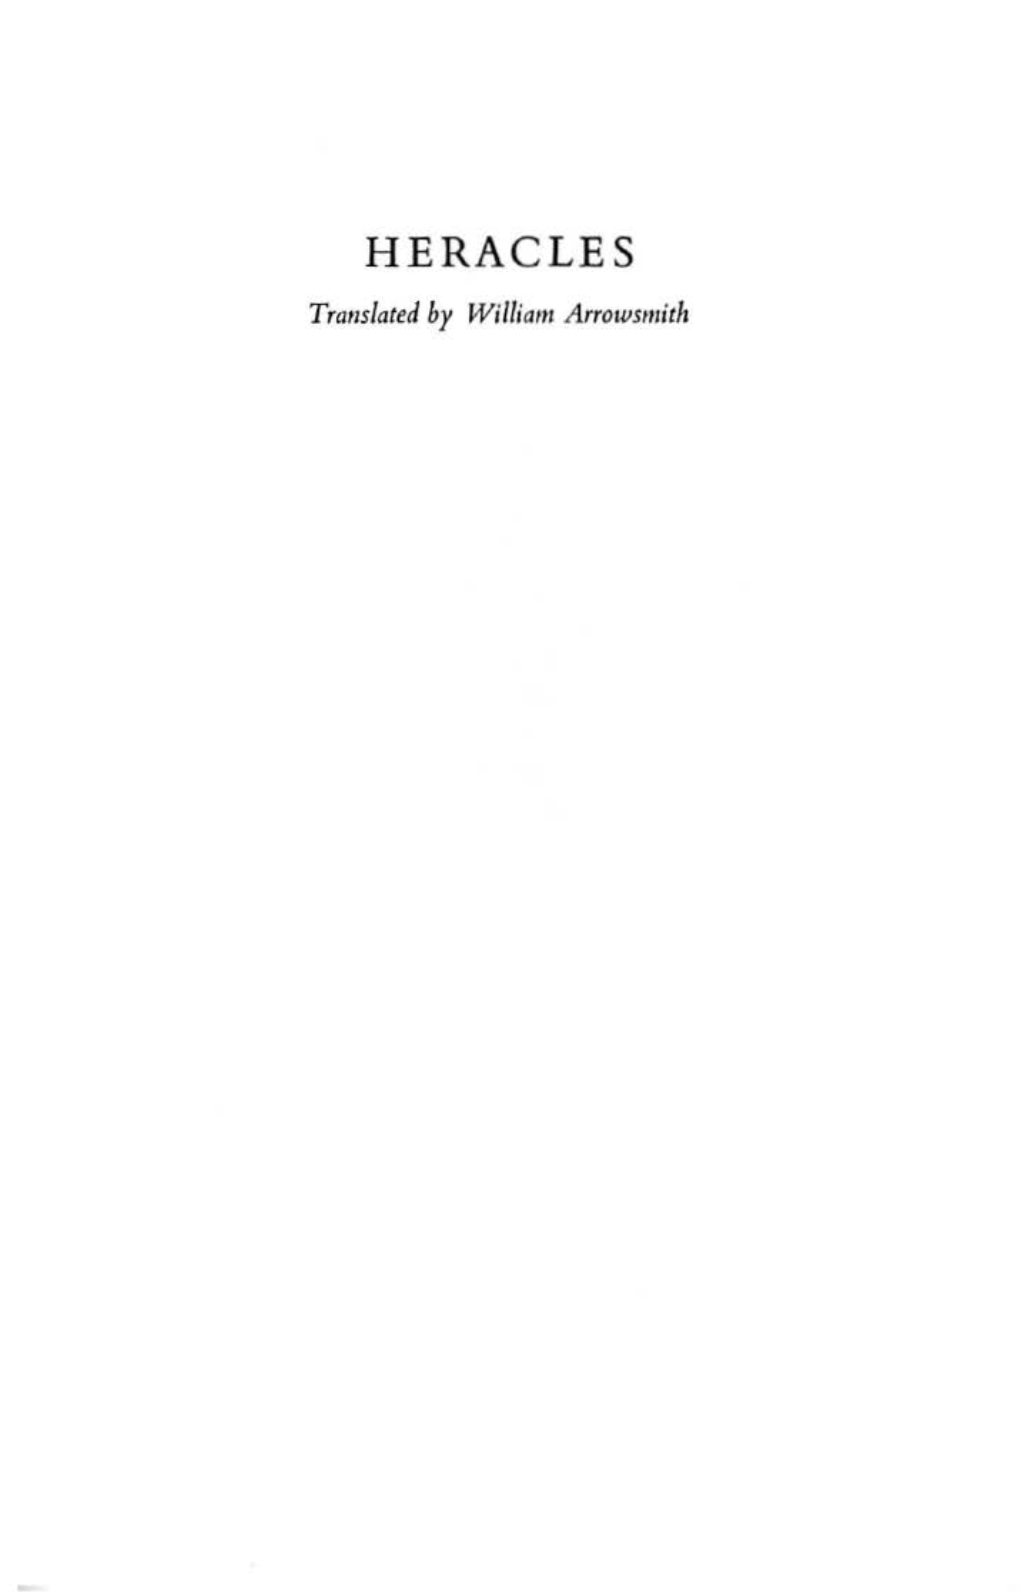 HERACLES Tratlslated by William Arrowsmith • HERA C I.Ils ~